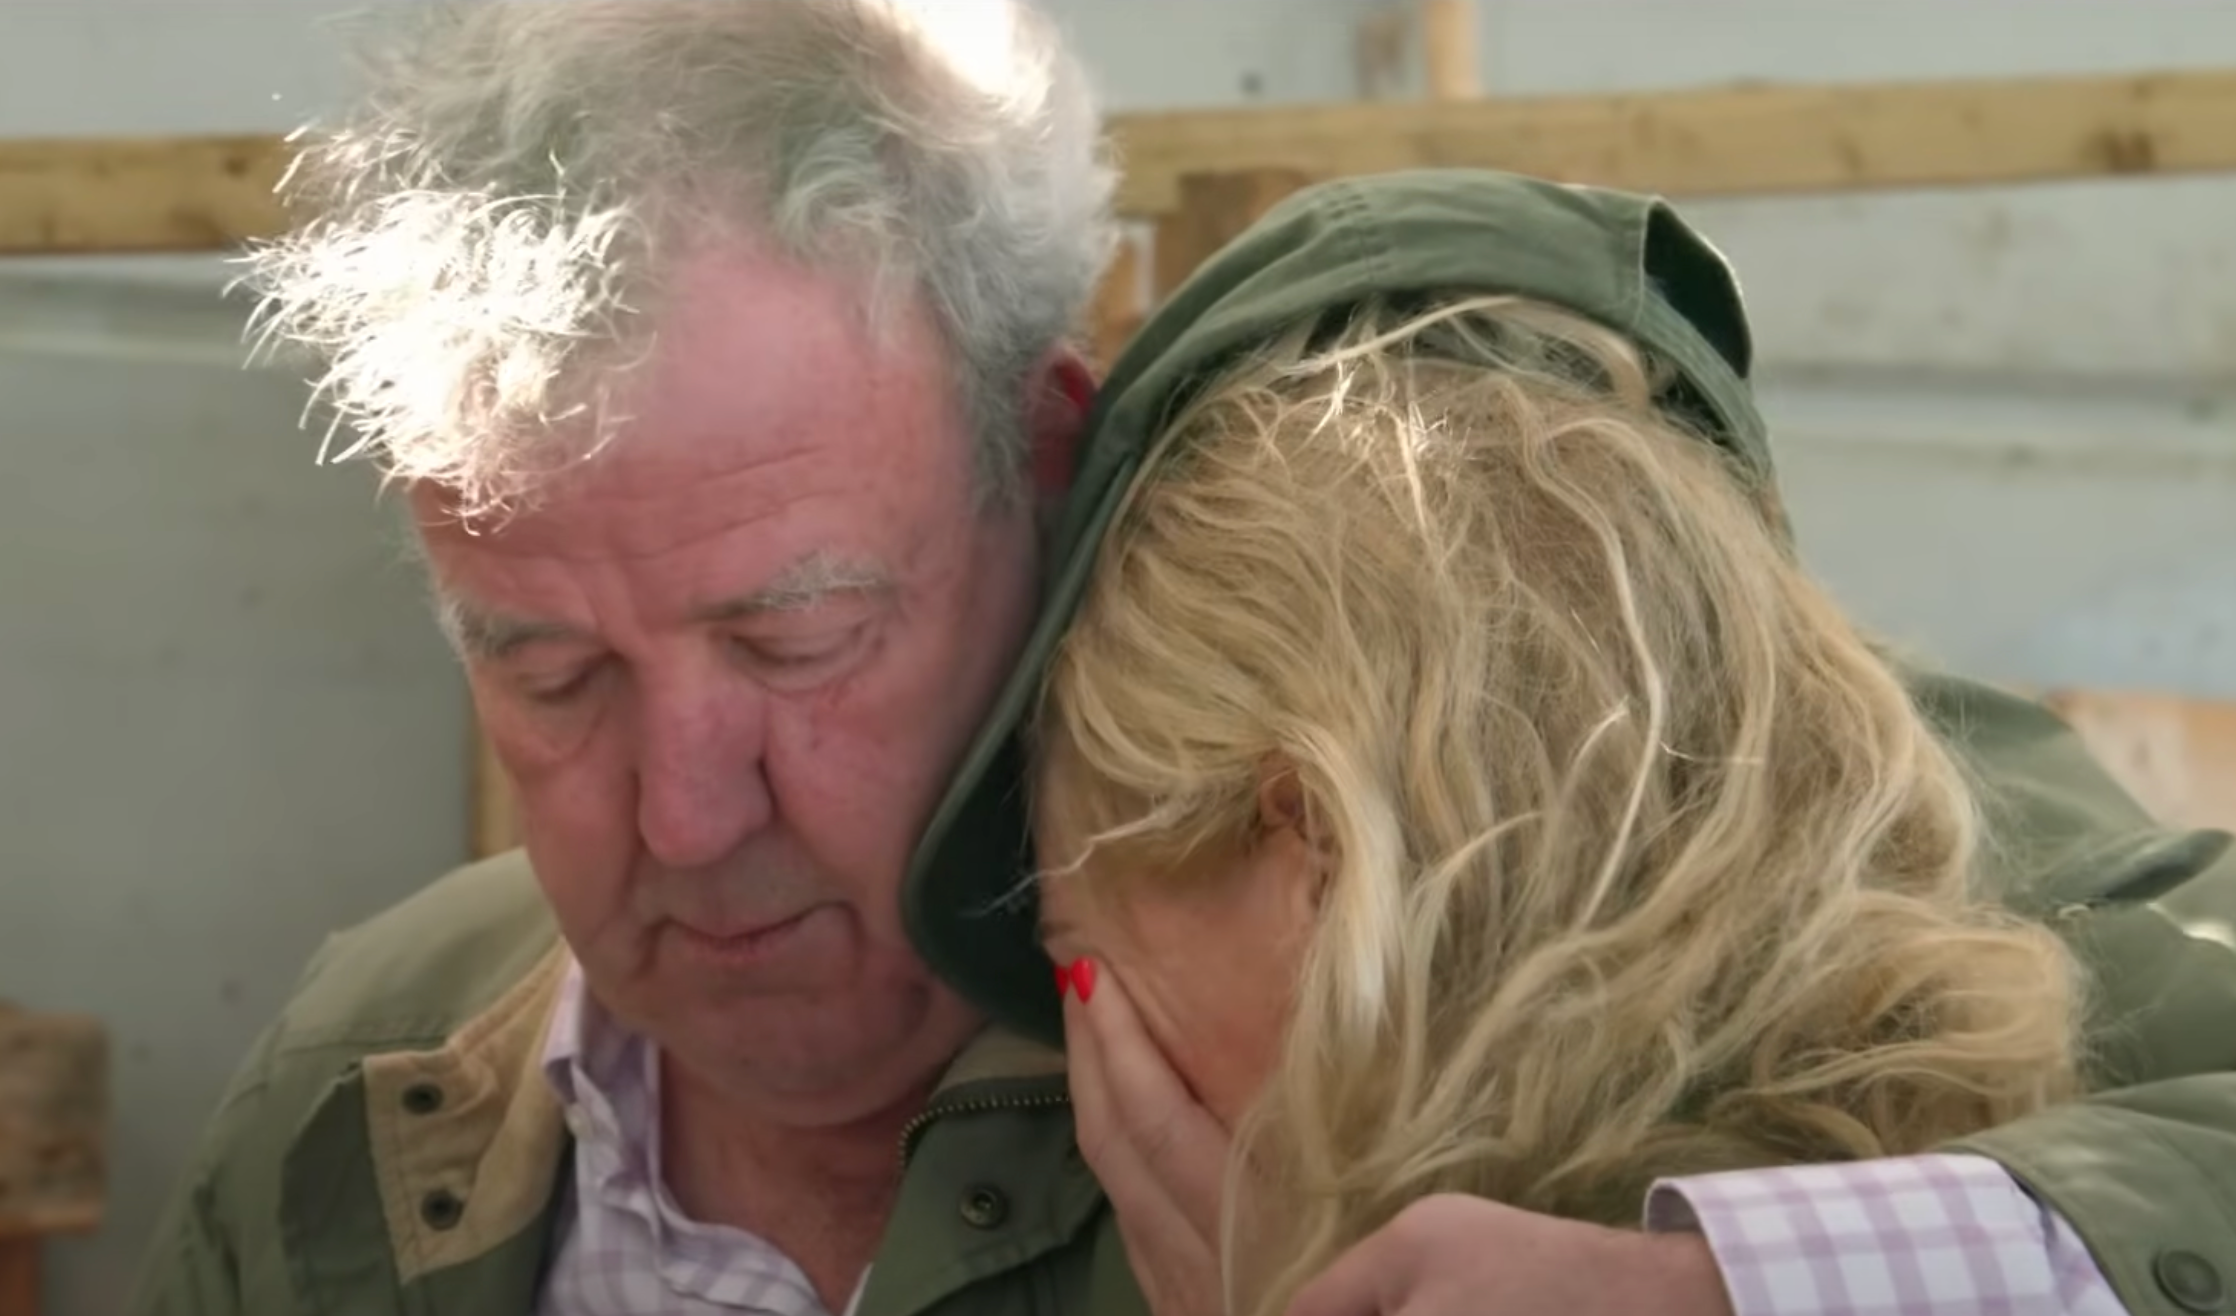 Clarkson is seem comforting his girlfriend Lisa